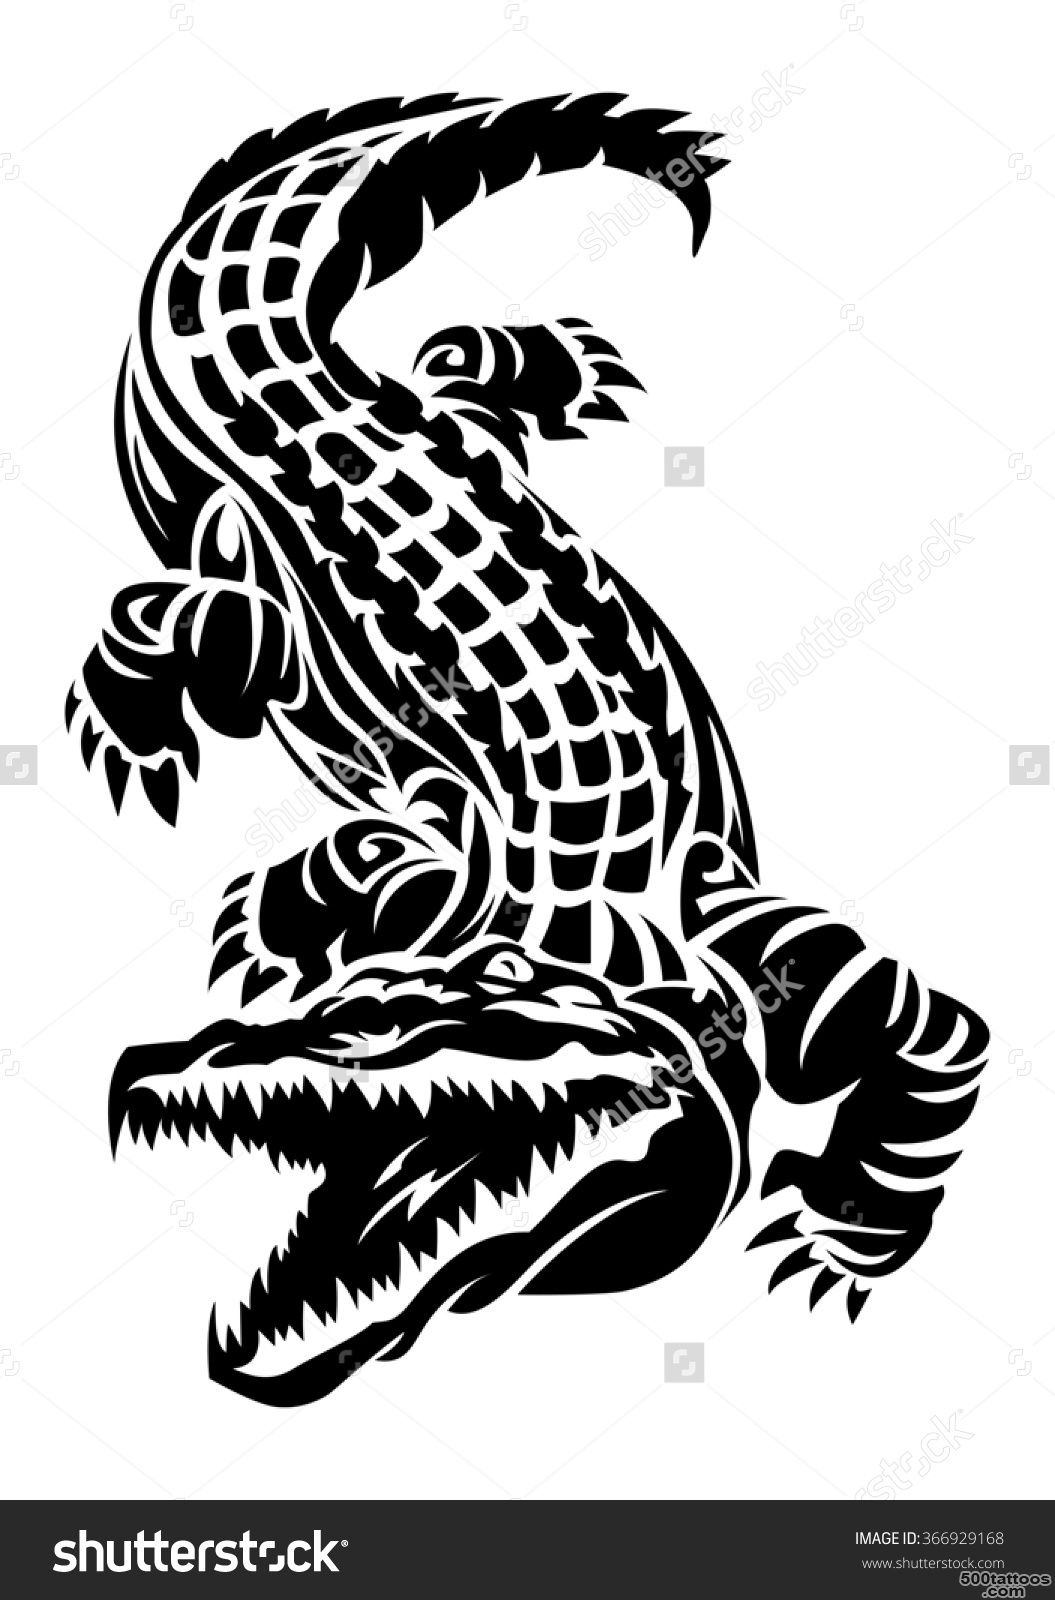 Illustration Of A Crocodile Tattoo On Isolated White Background ..._4